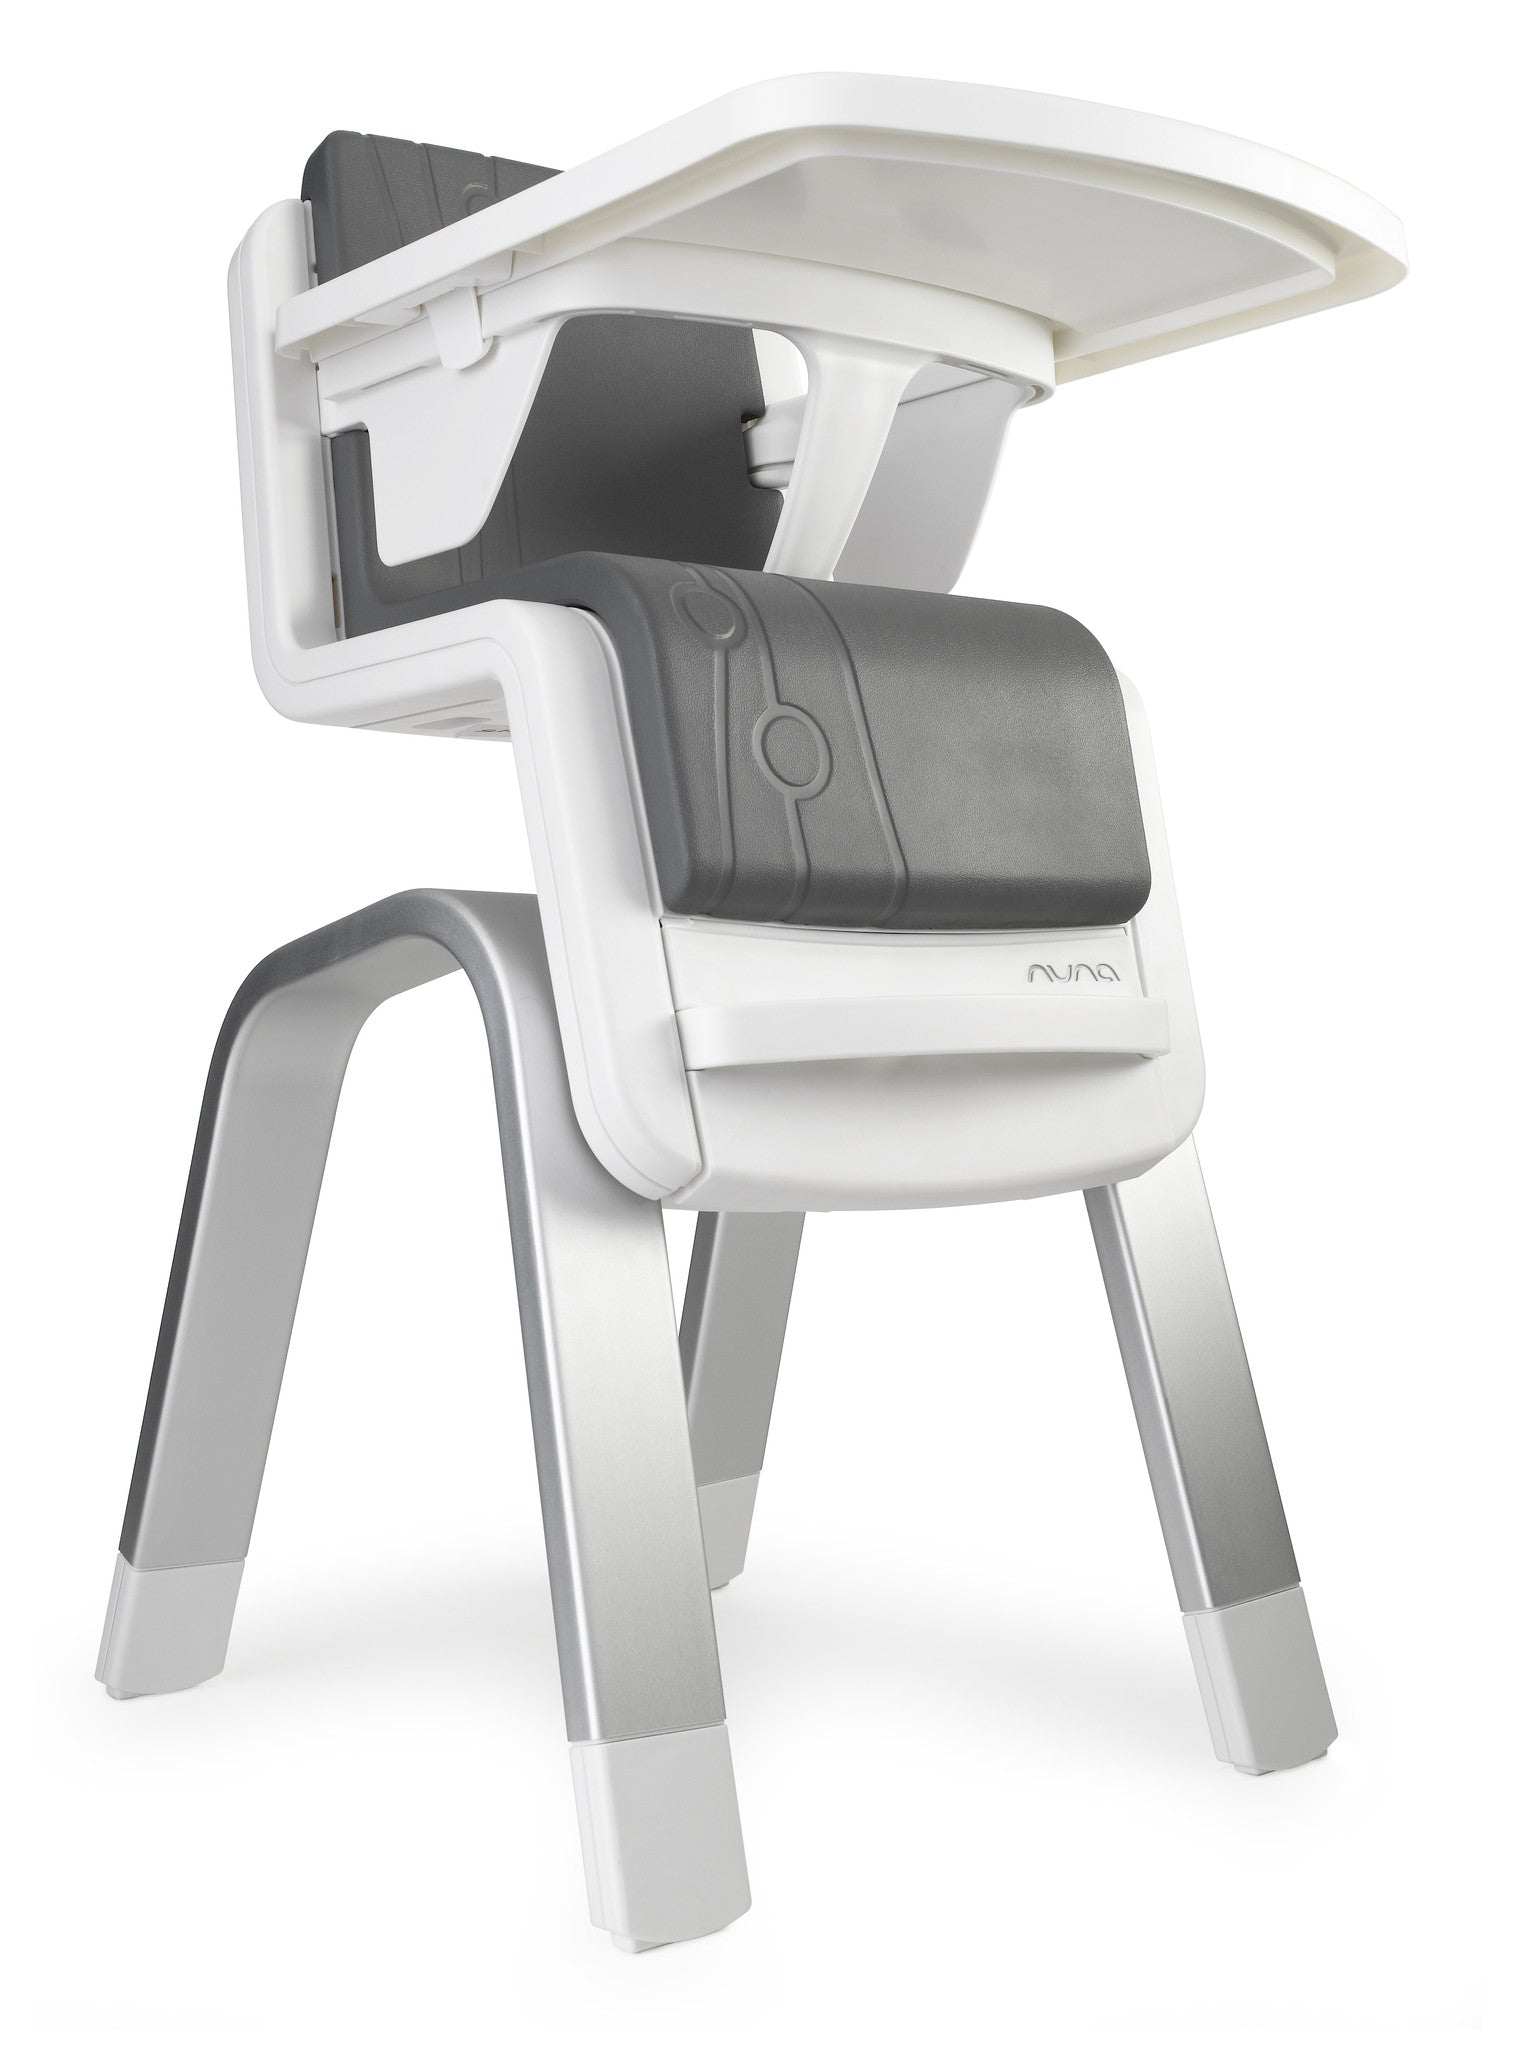 Nuna Zaaz High Chair for Modern Parents - $299.95 – PeppyParents Ohio